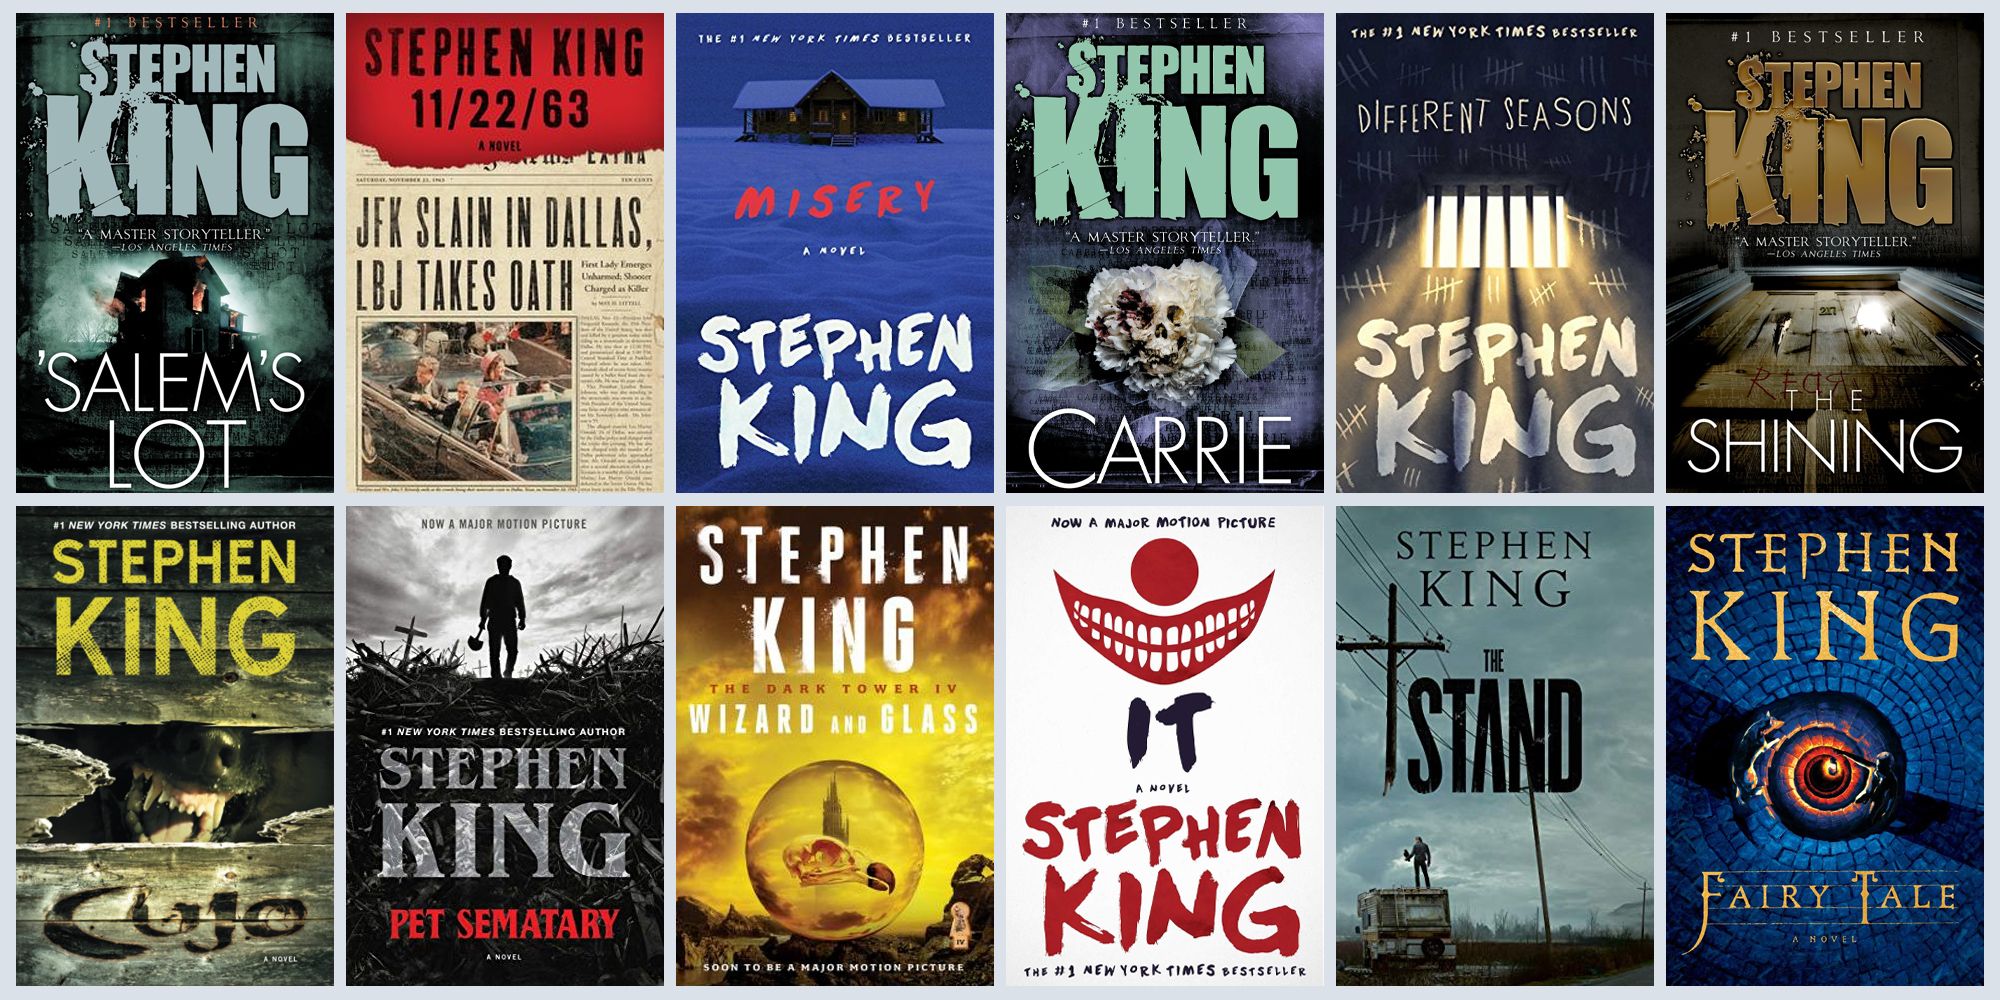 Beyond Horror: Stephen King's Books That Push Genre Boundaries